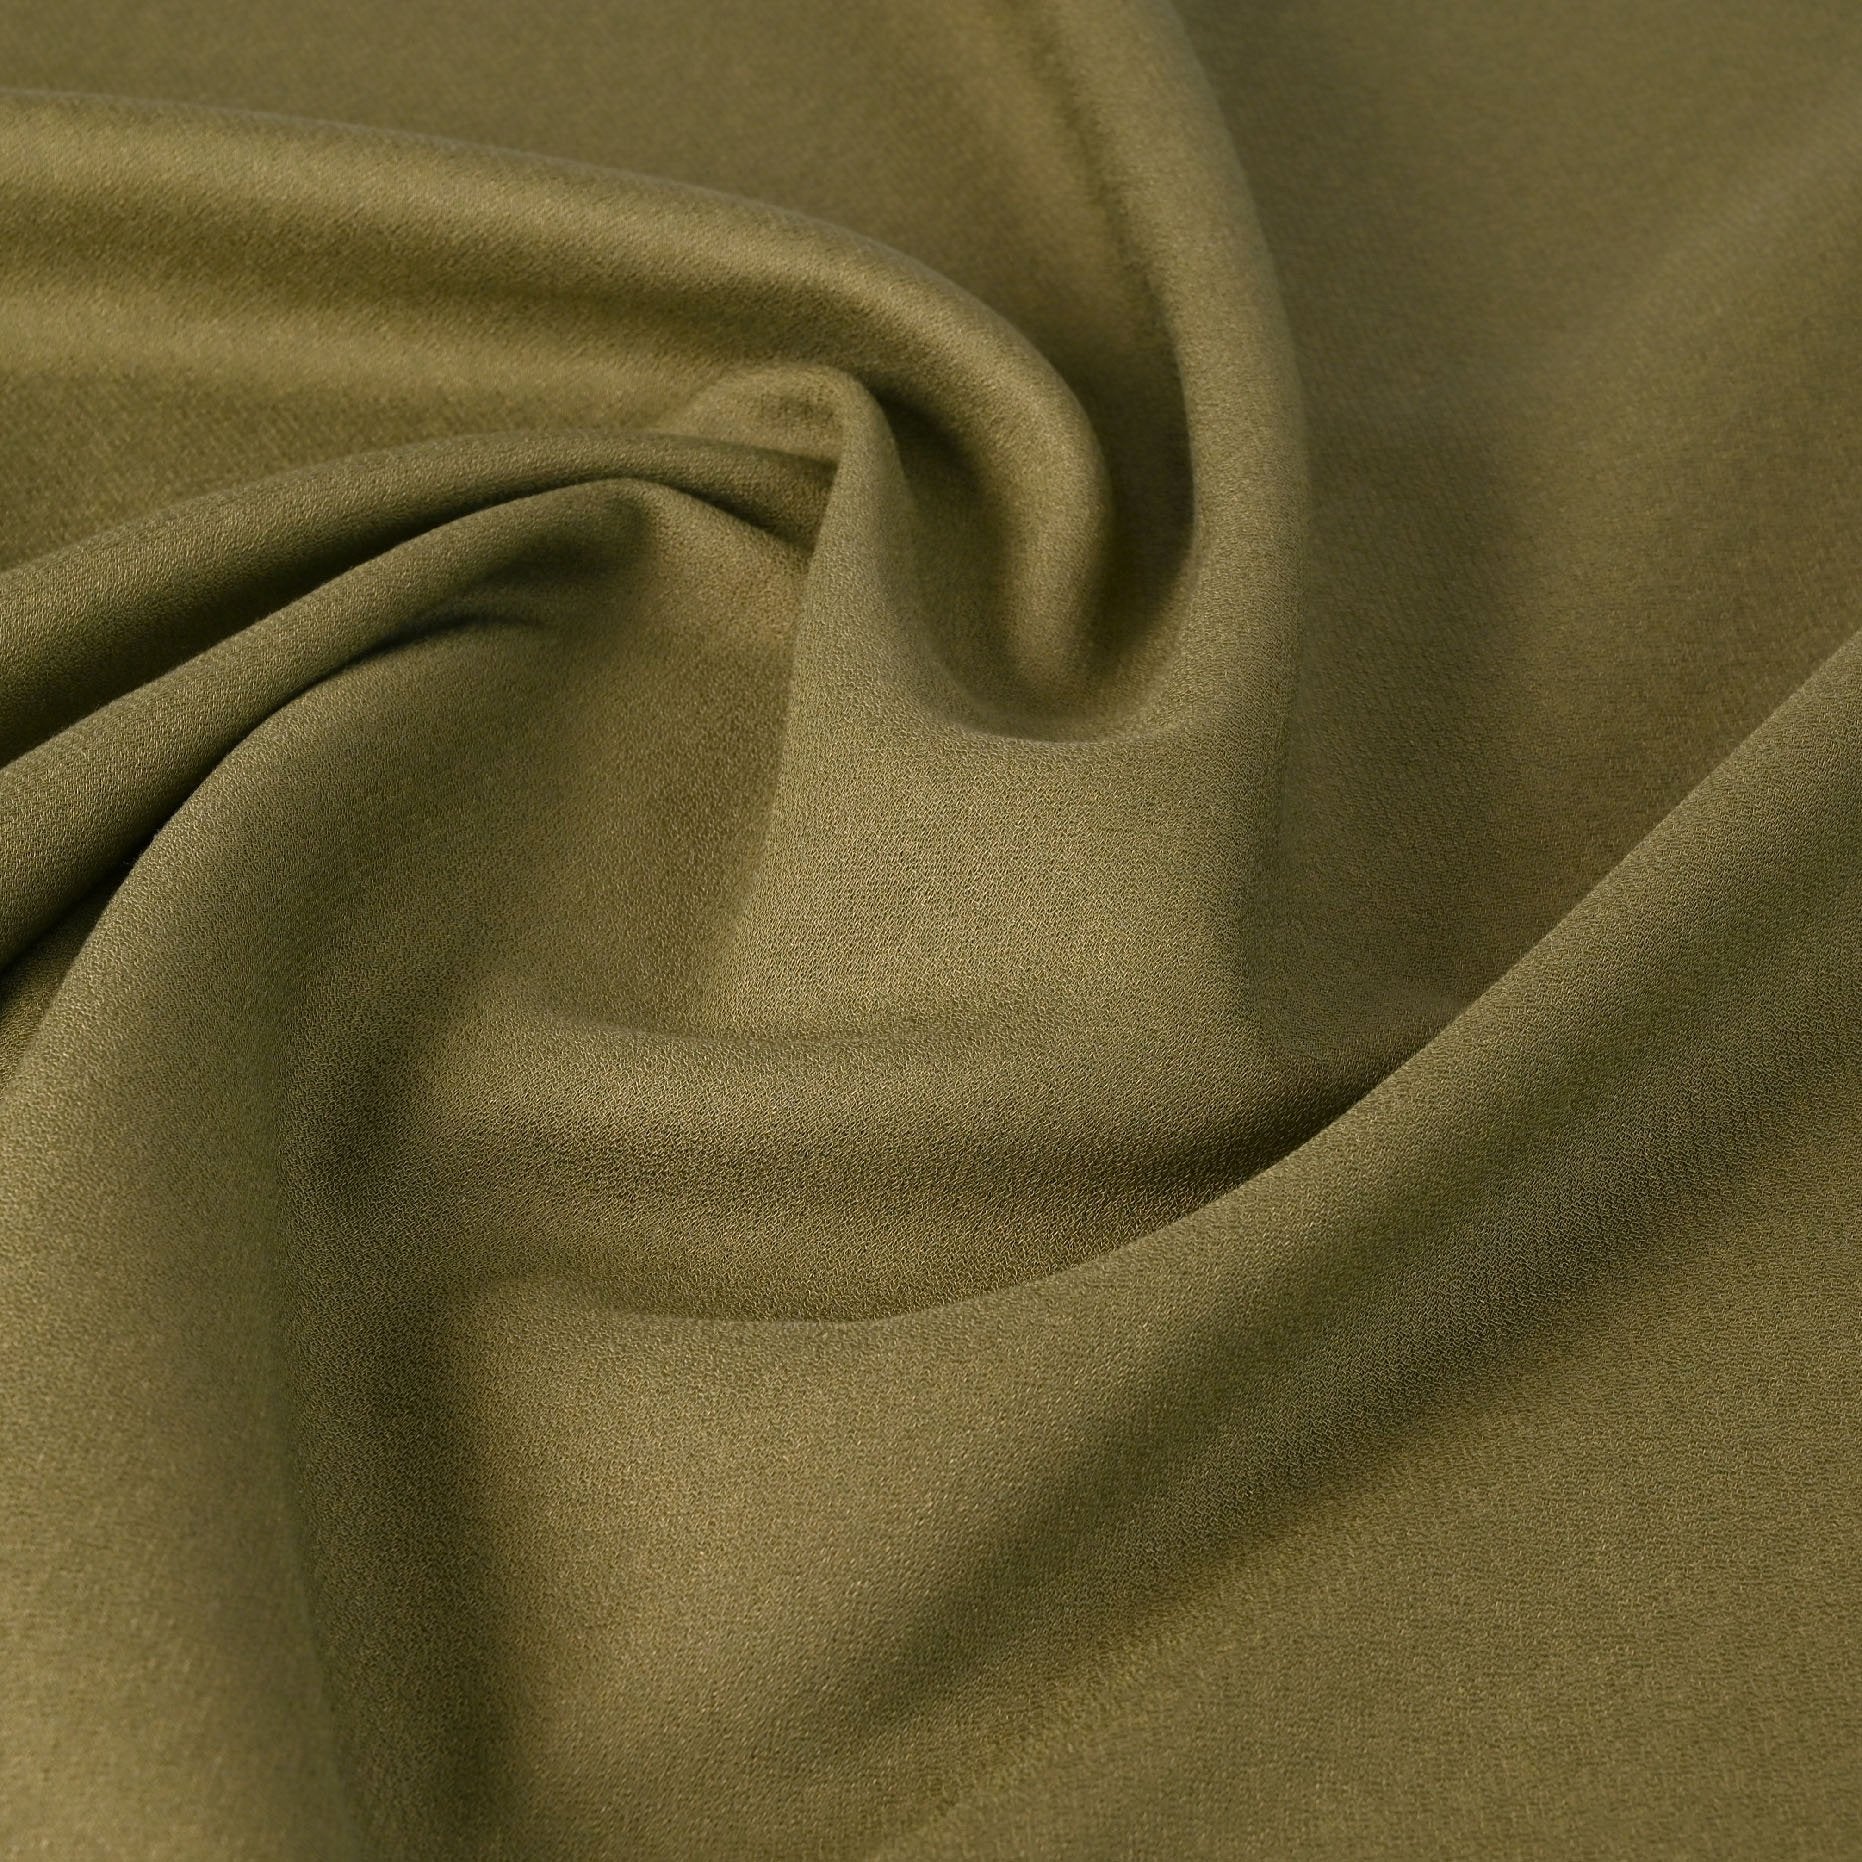 Khaki Green Coating Fabric 3240